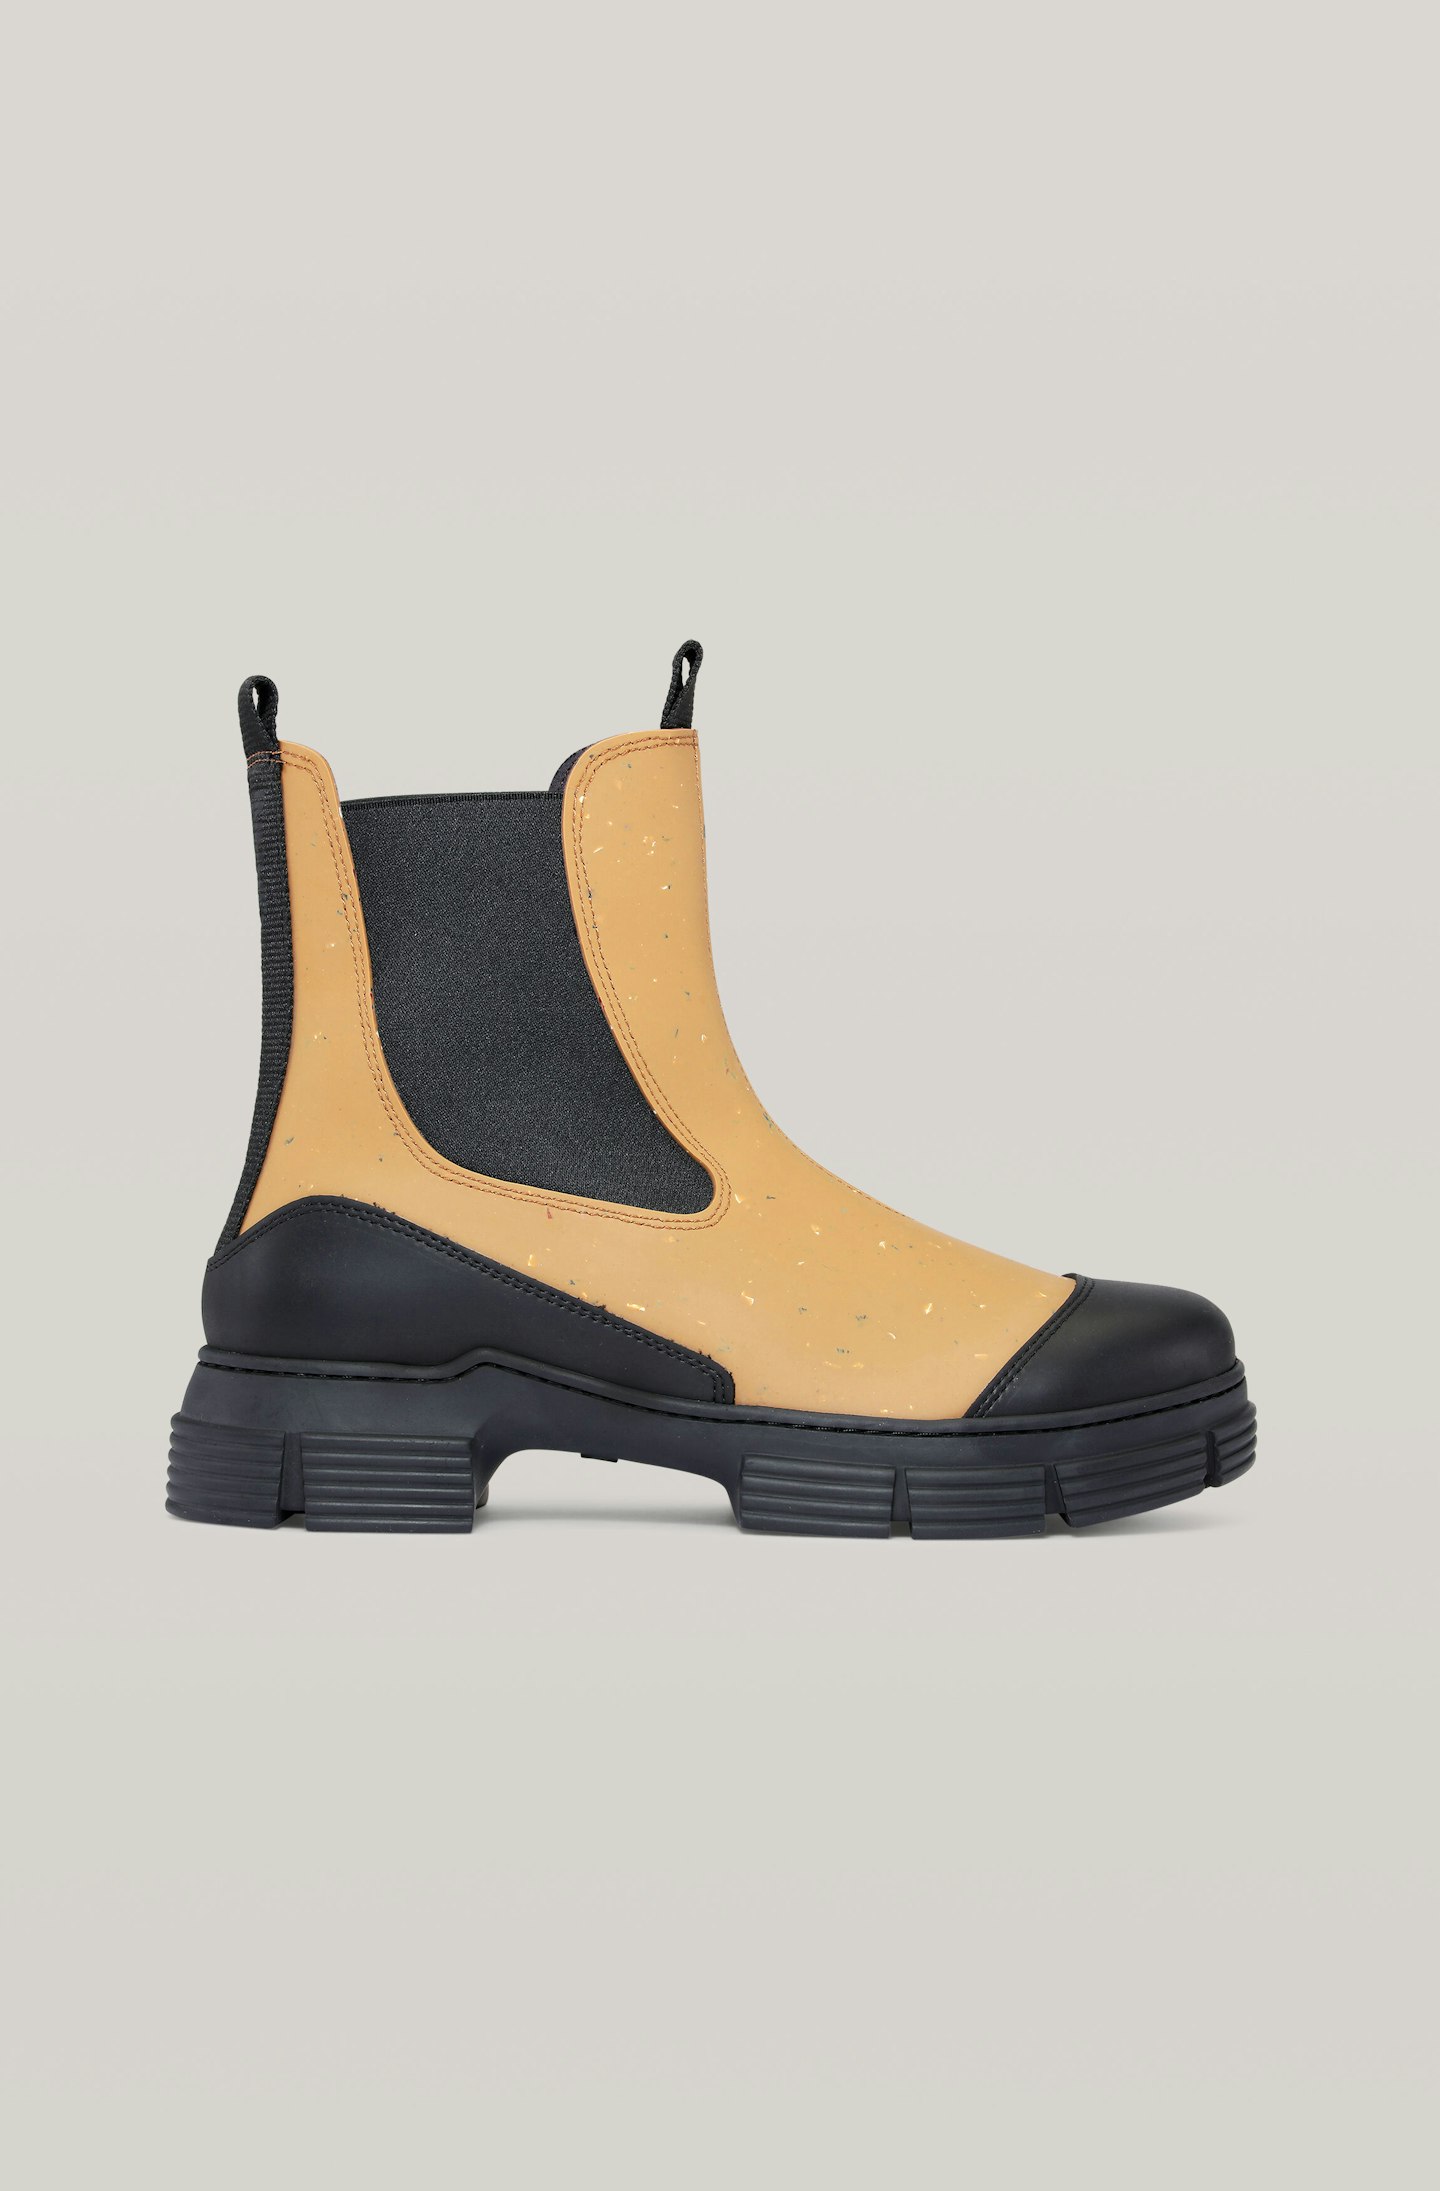 Ganni, Rubber Boots, £195